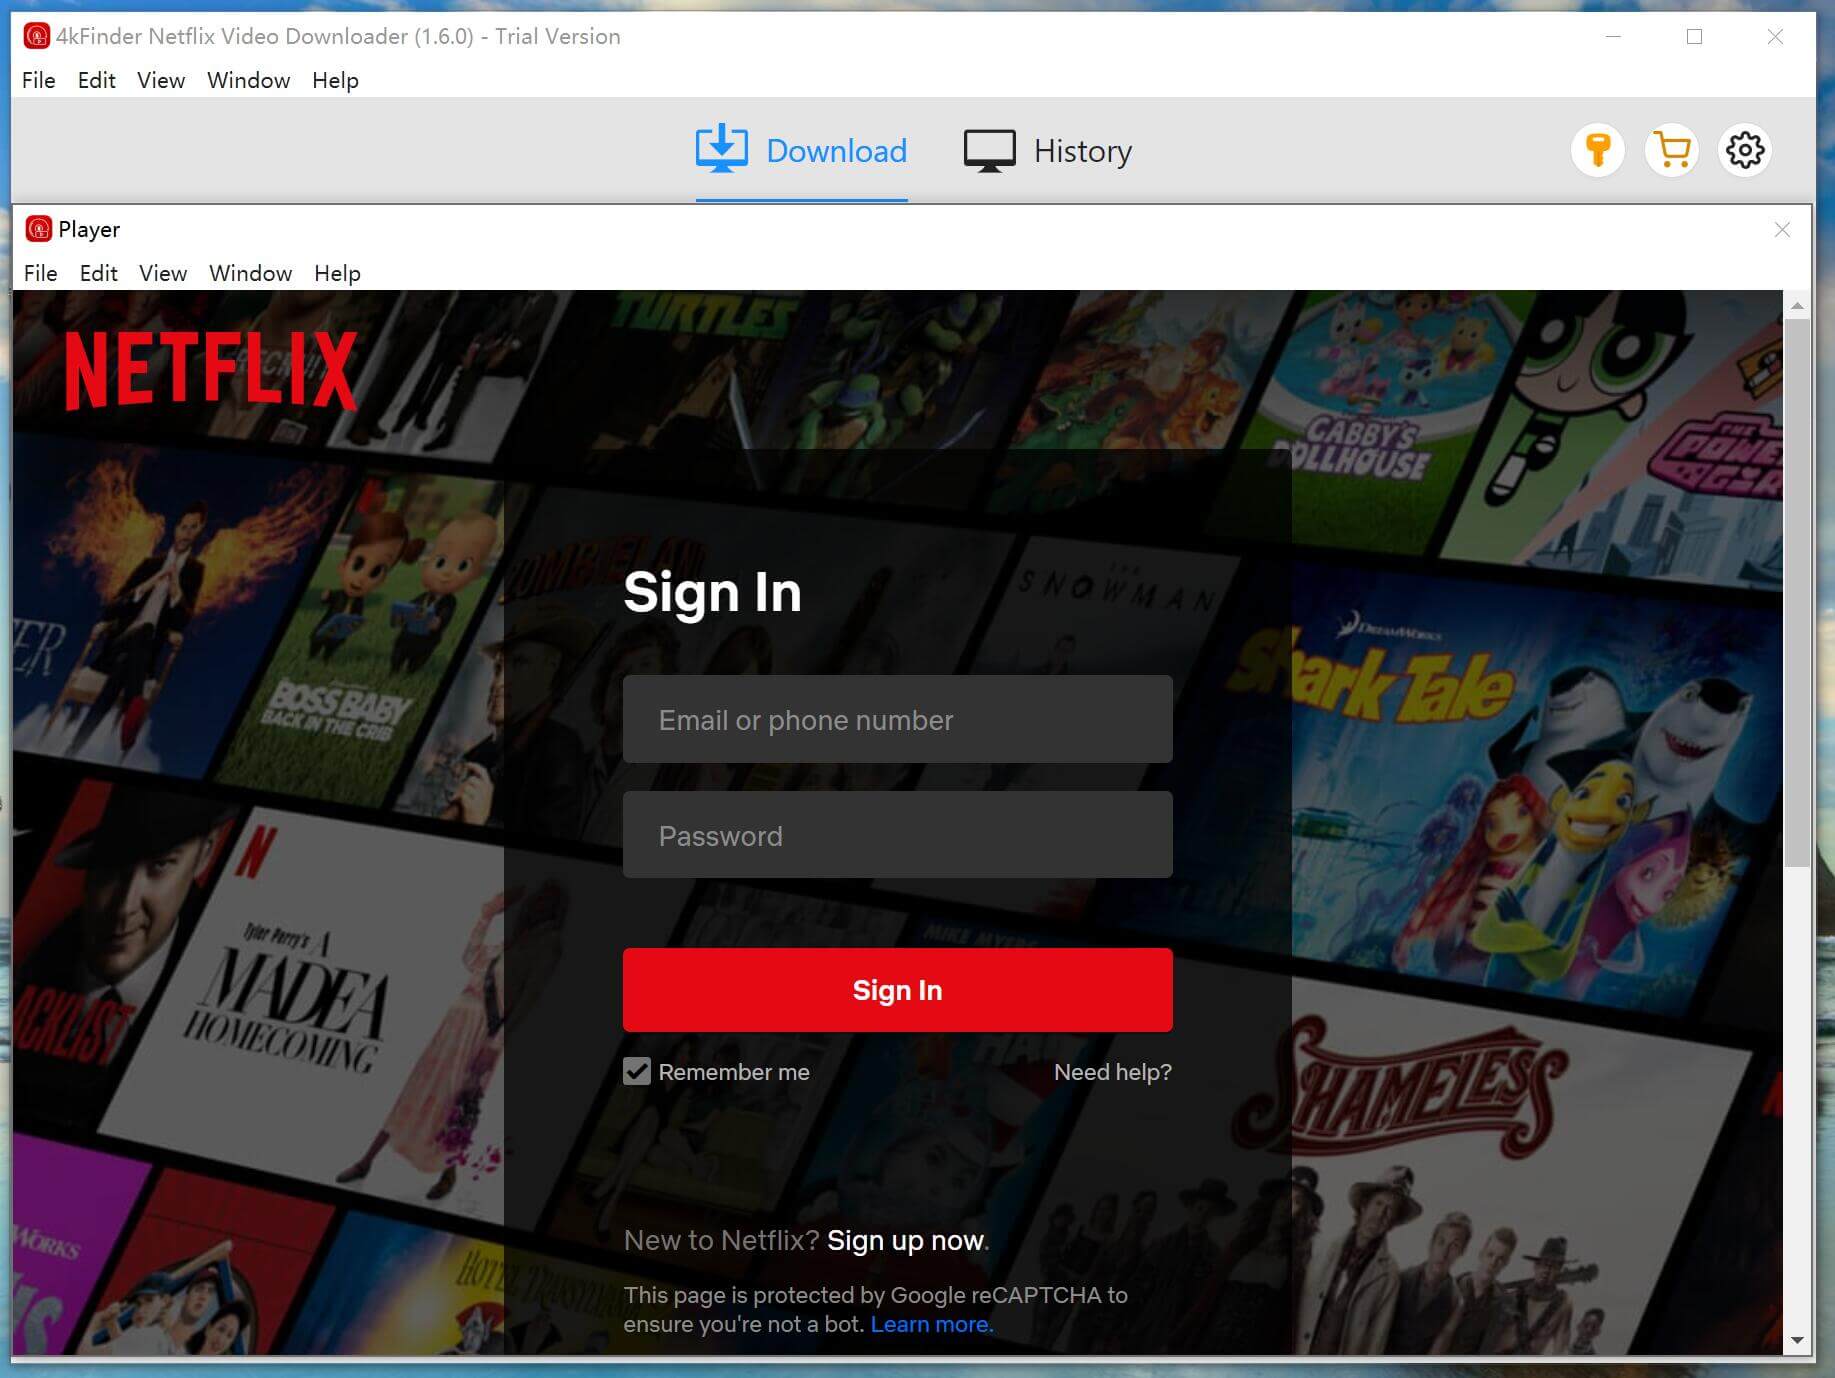 Start 4kFinder Netflix Video Downloader